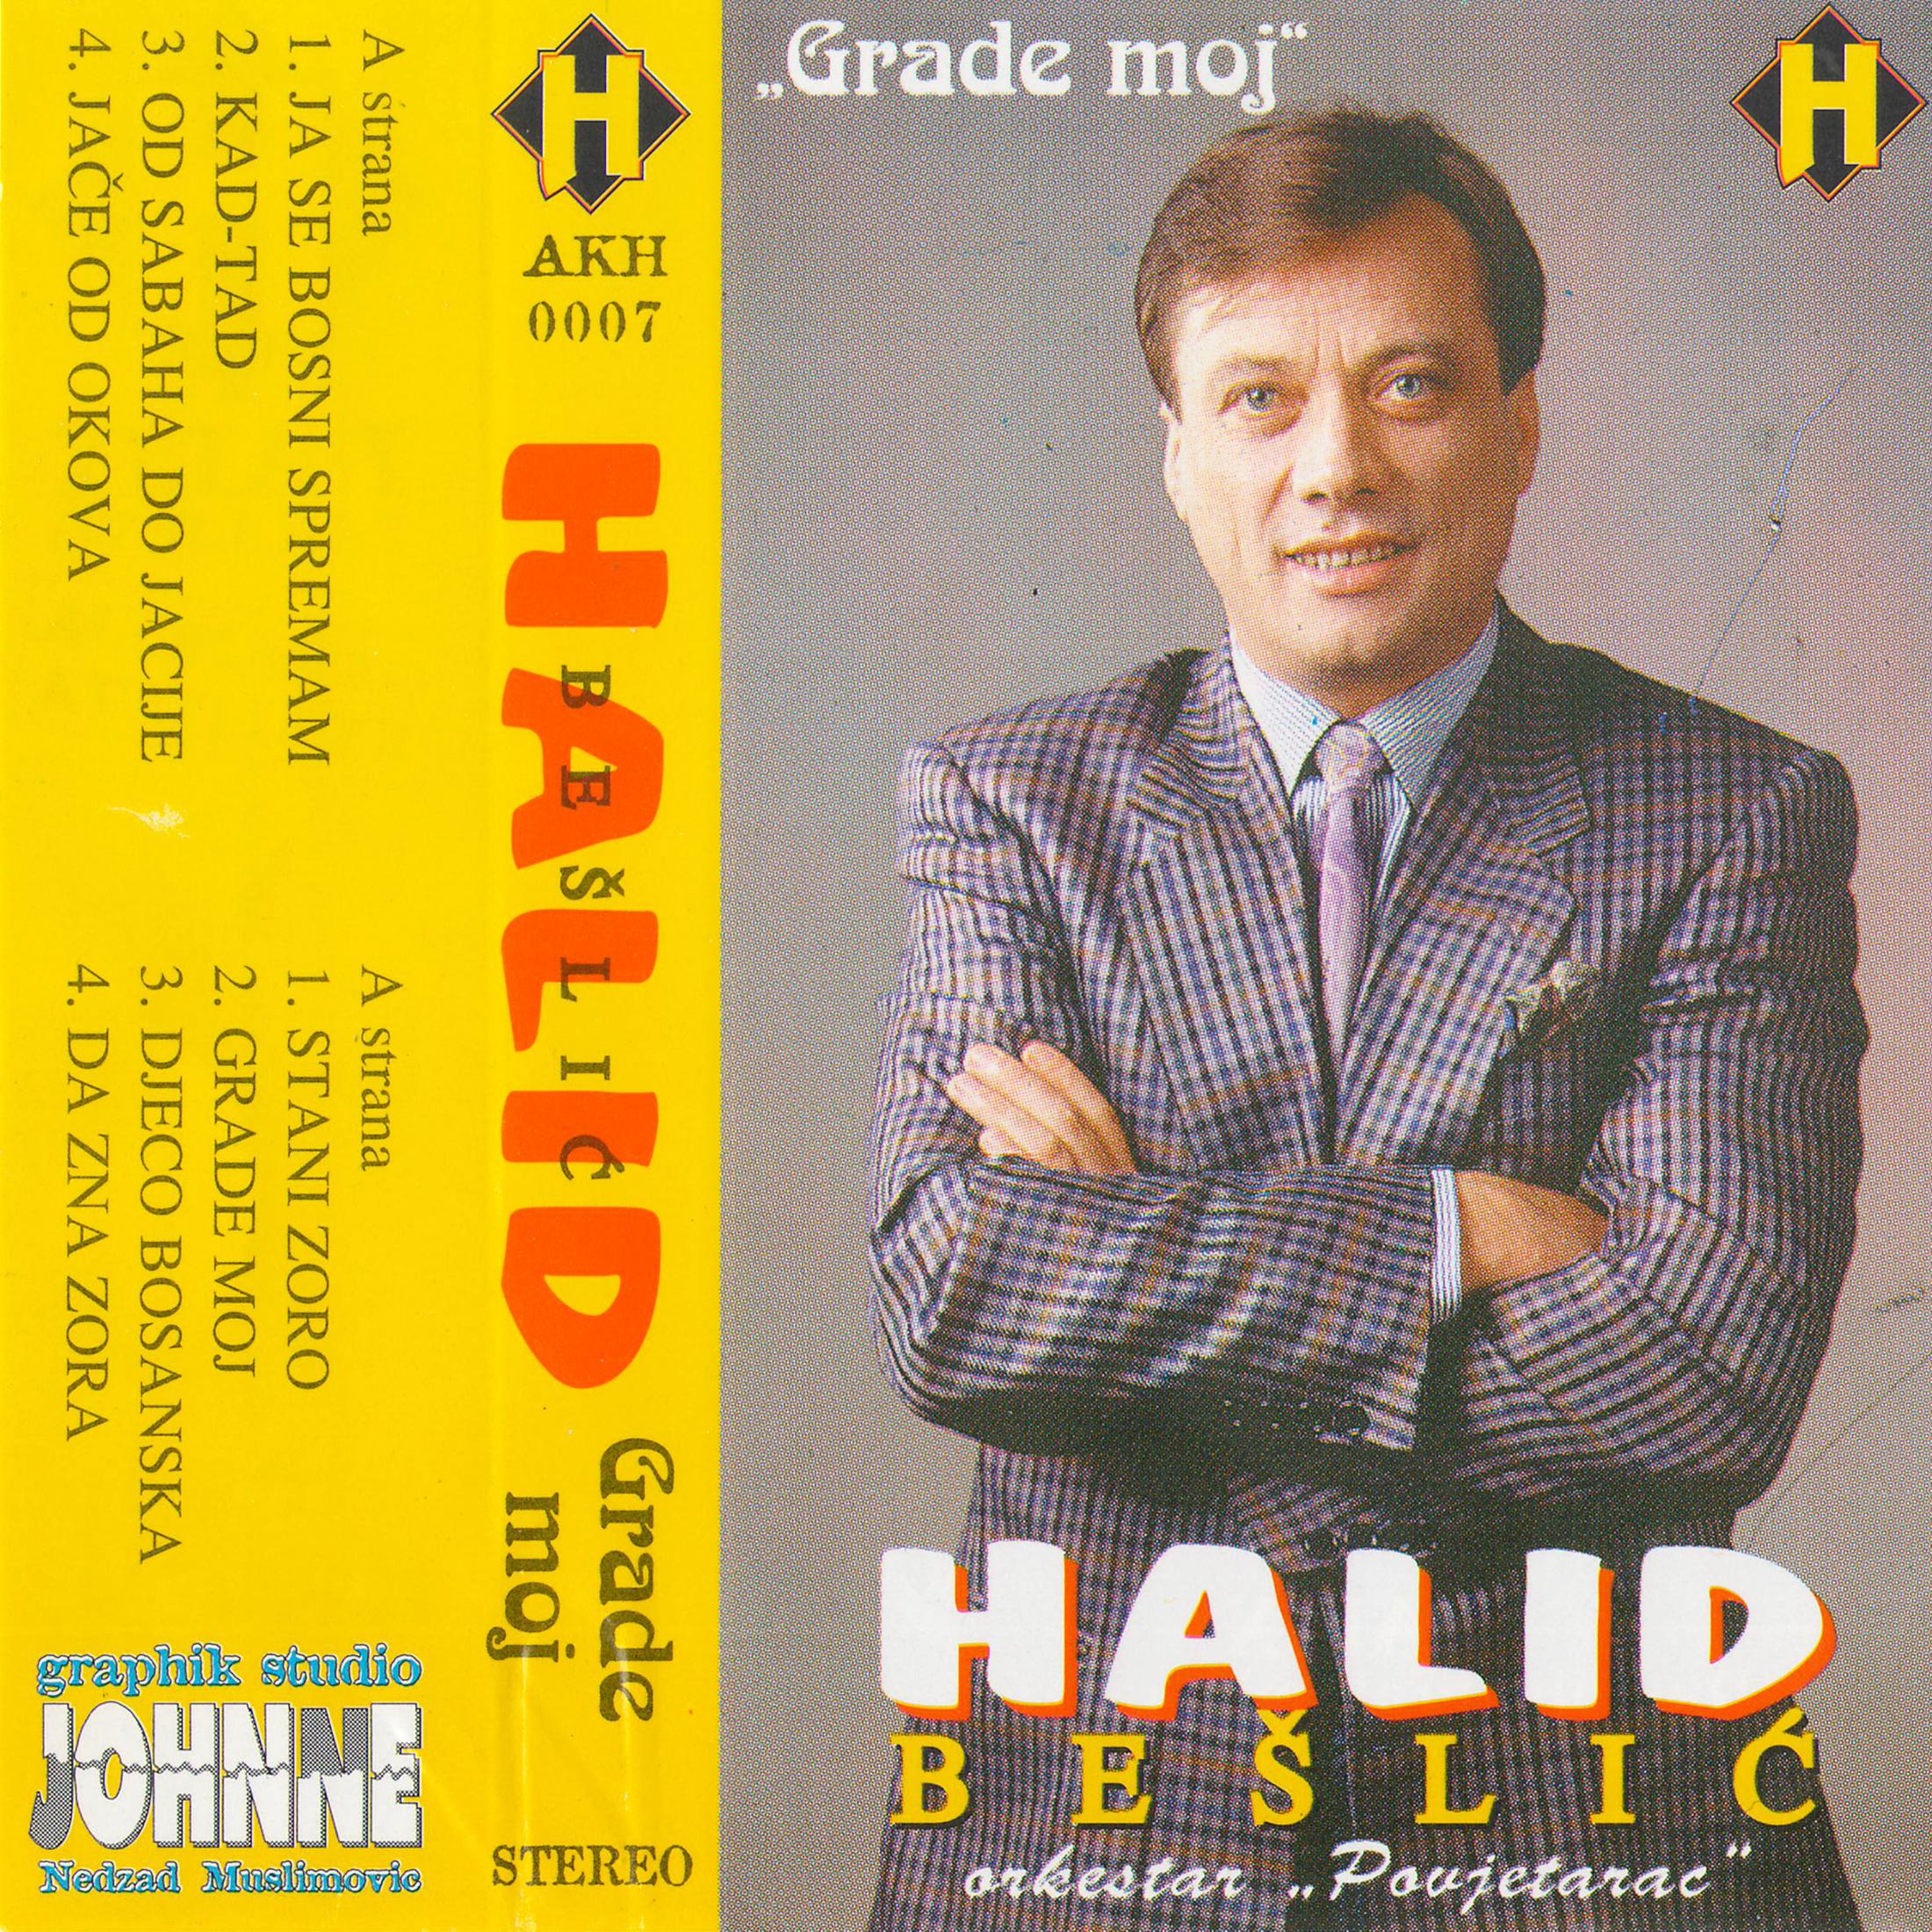 Kad-tad (Bosnian music)